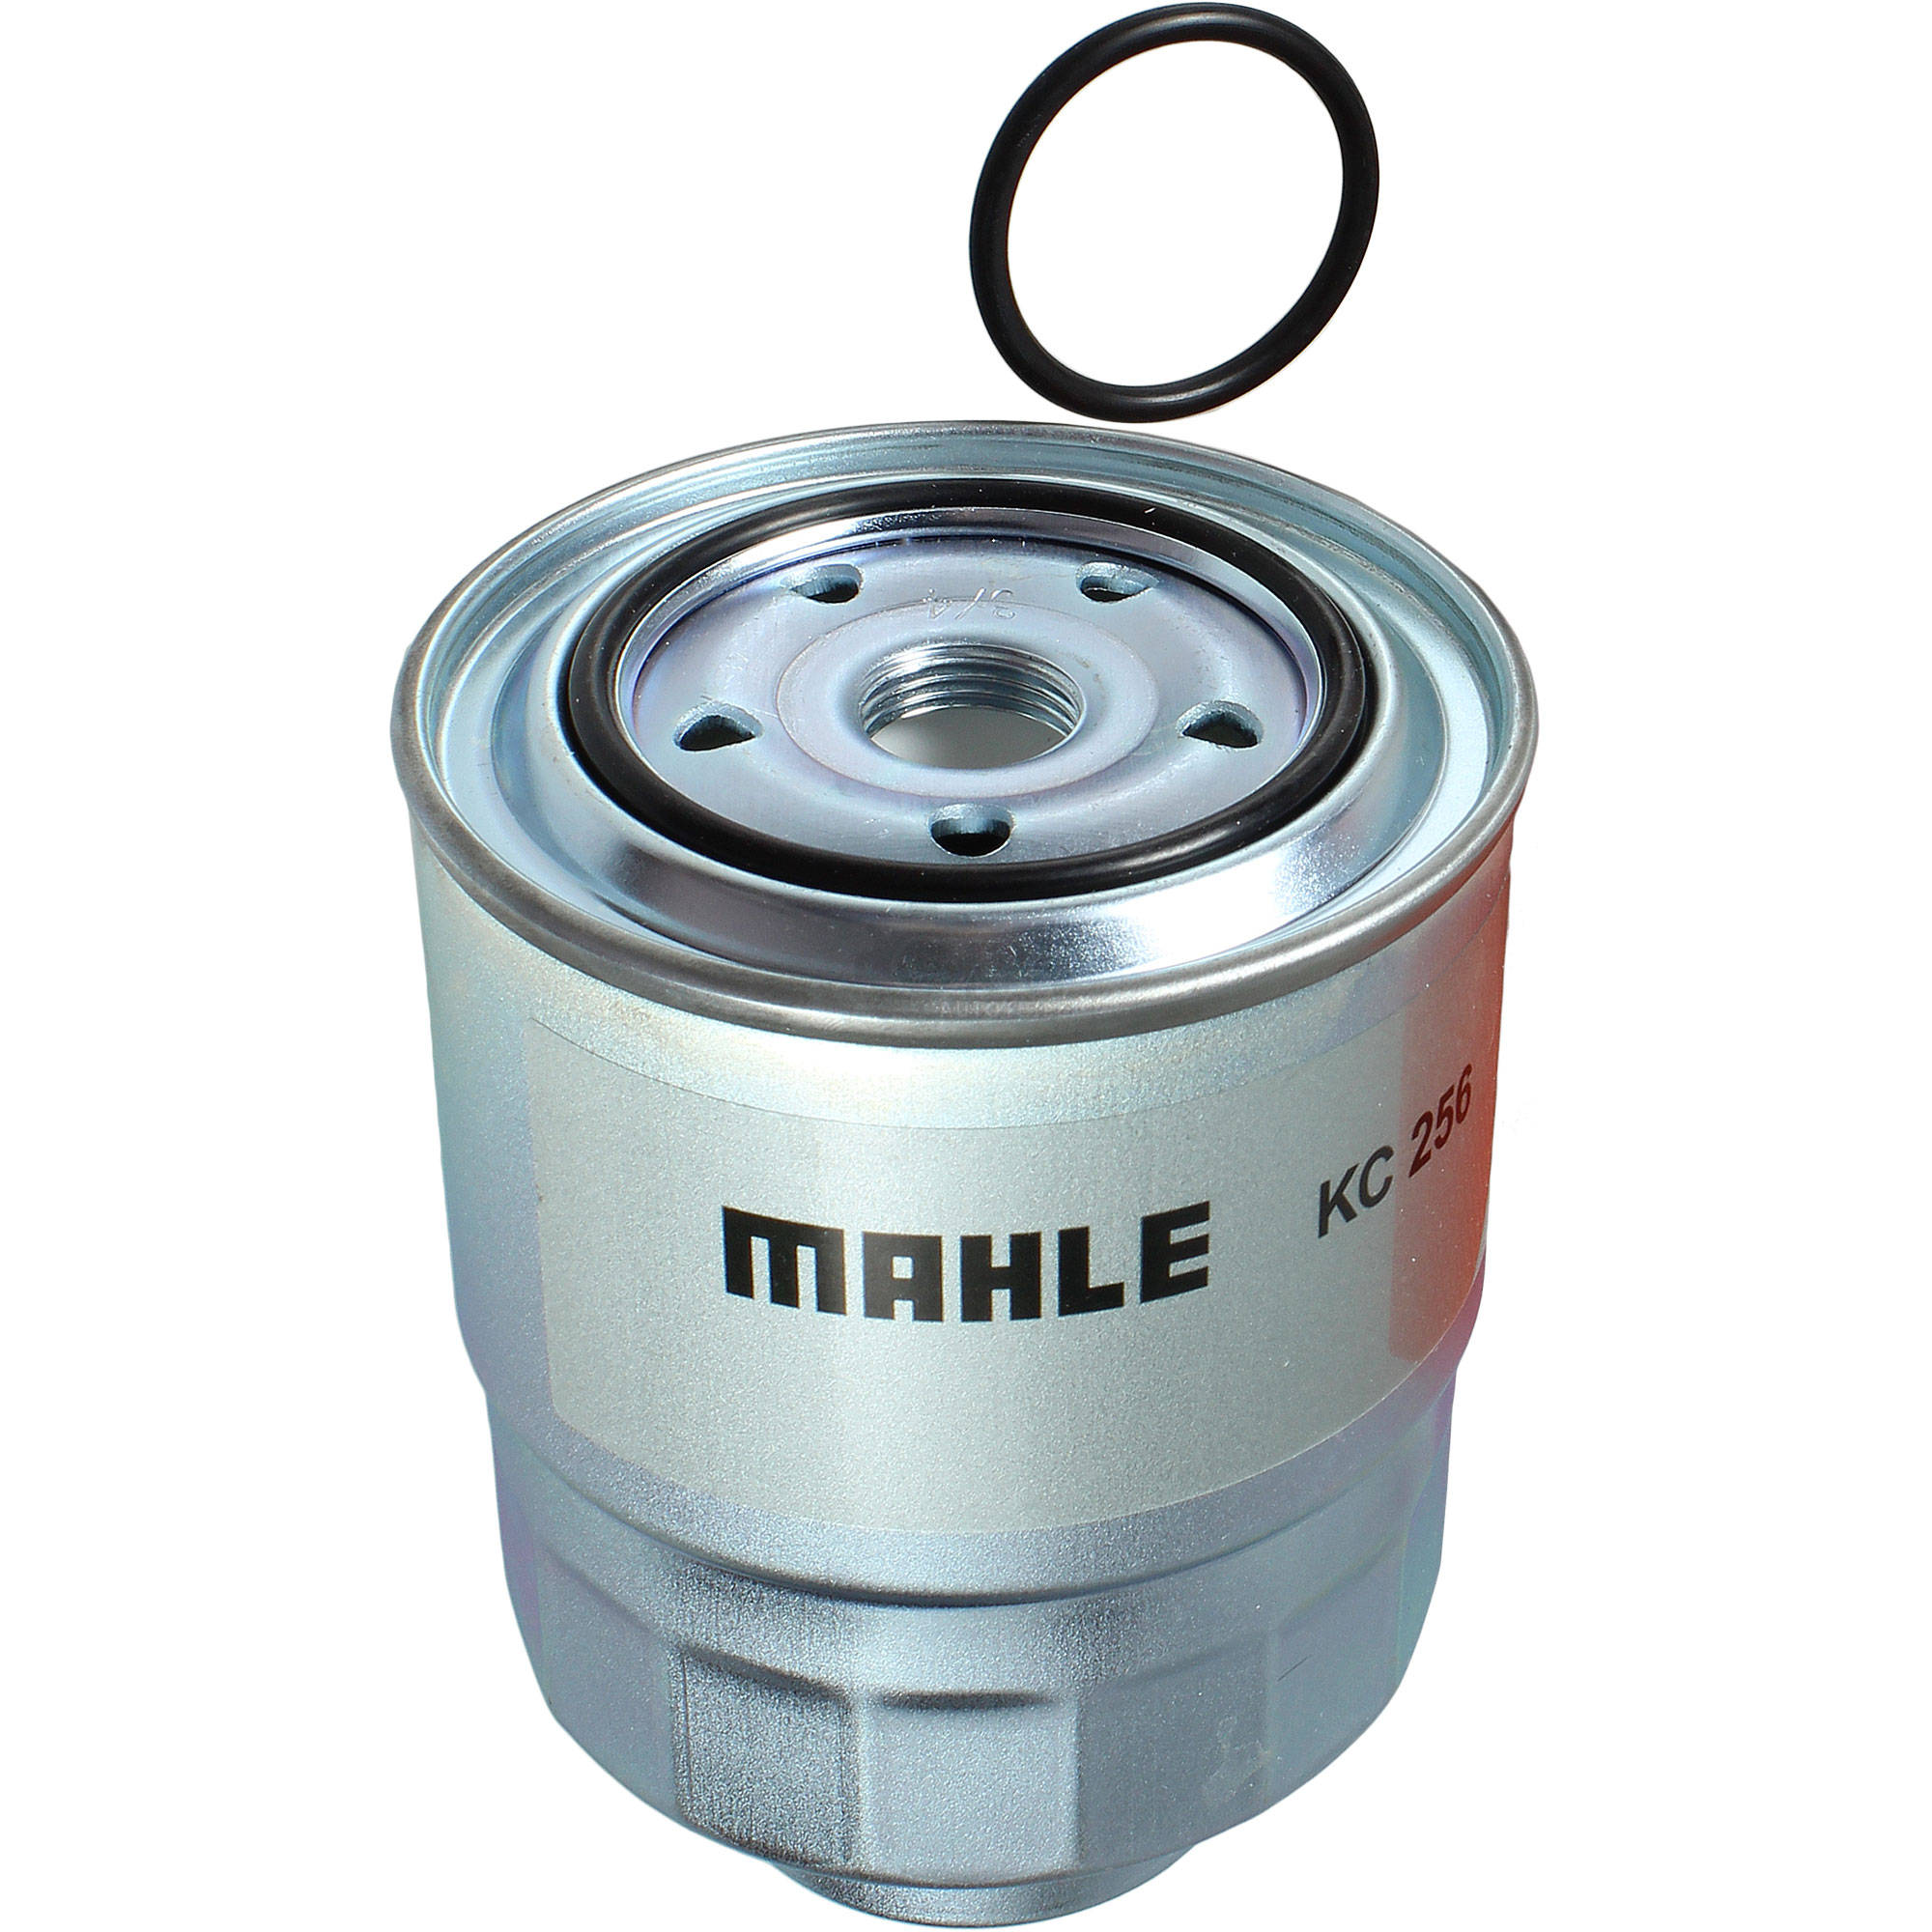 MAHLE / KNECHT KC 256D Kraftstofffilter Filter Fuel